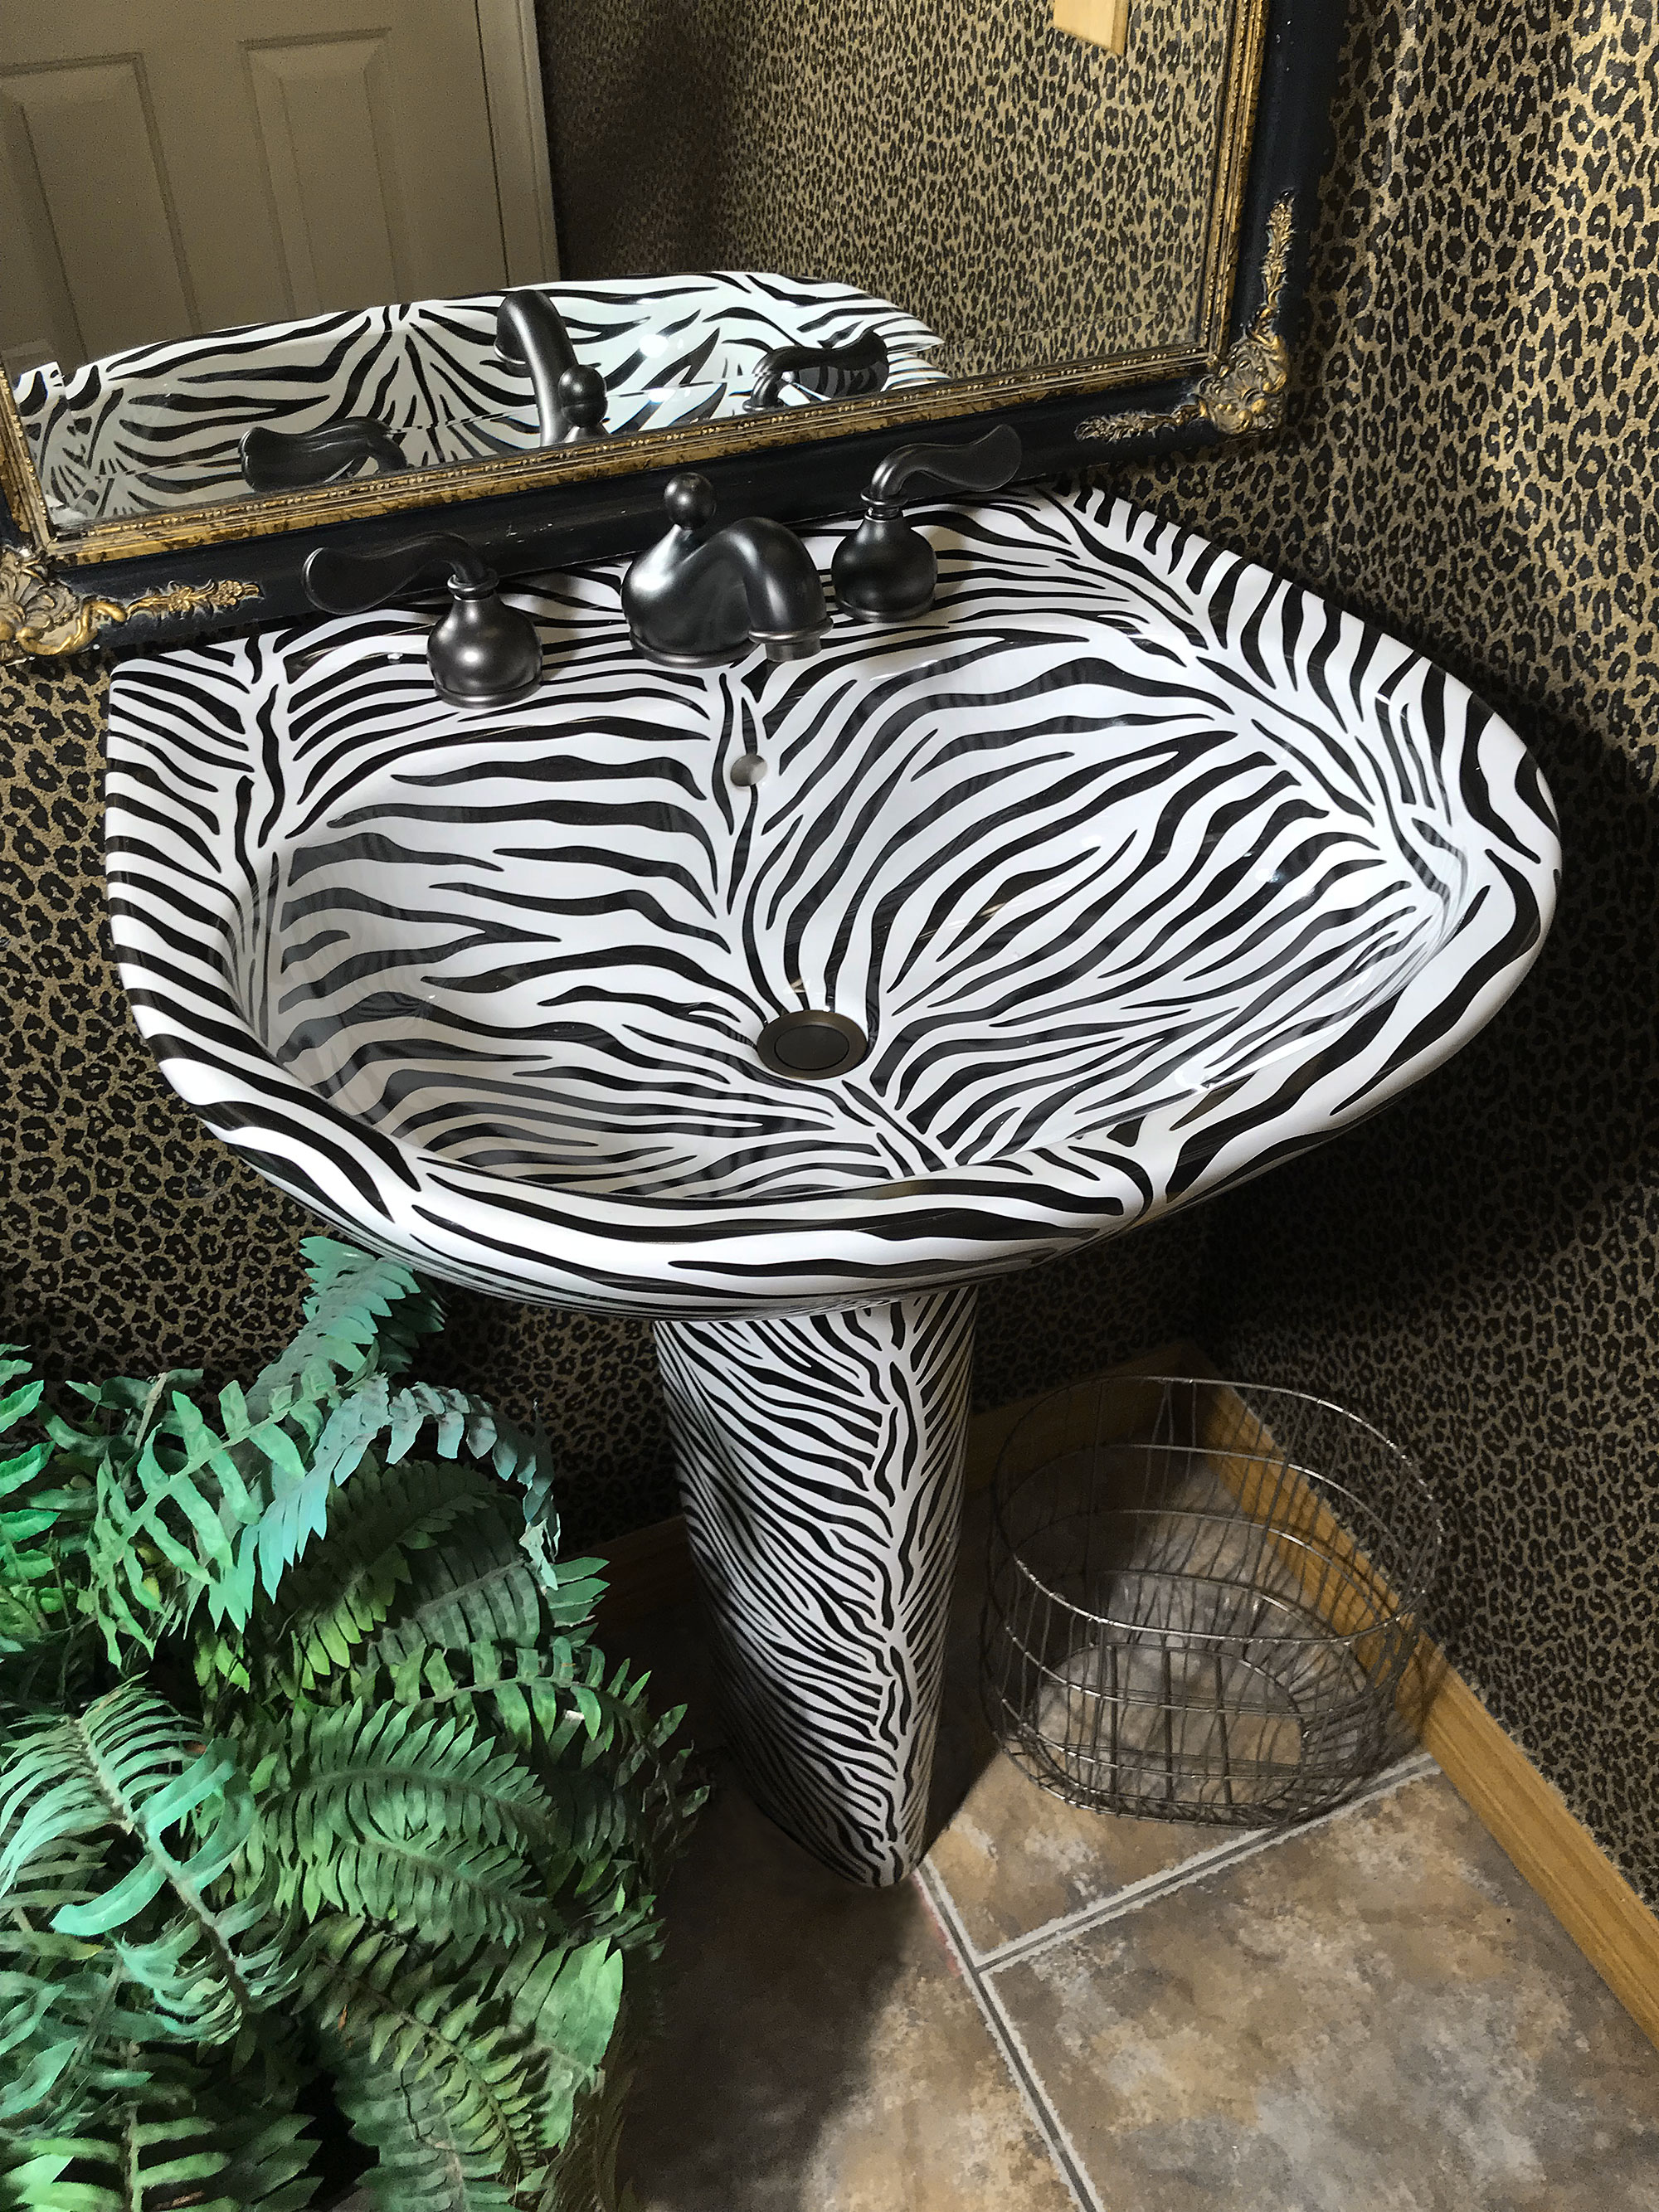 zebra pedestal sink in jungle bathroom